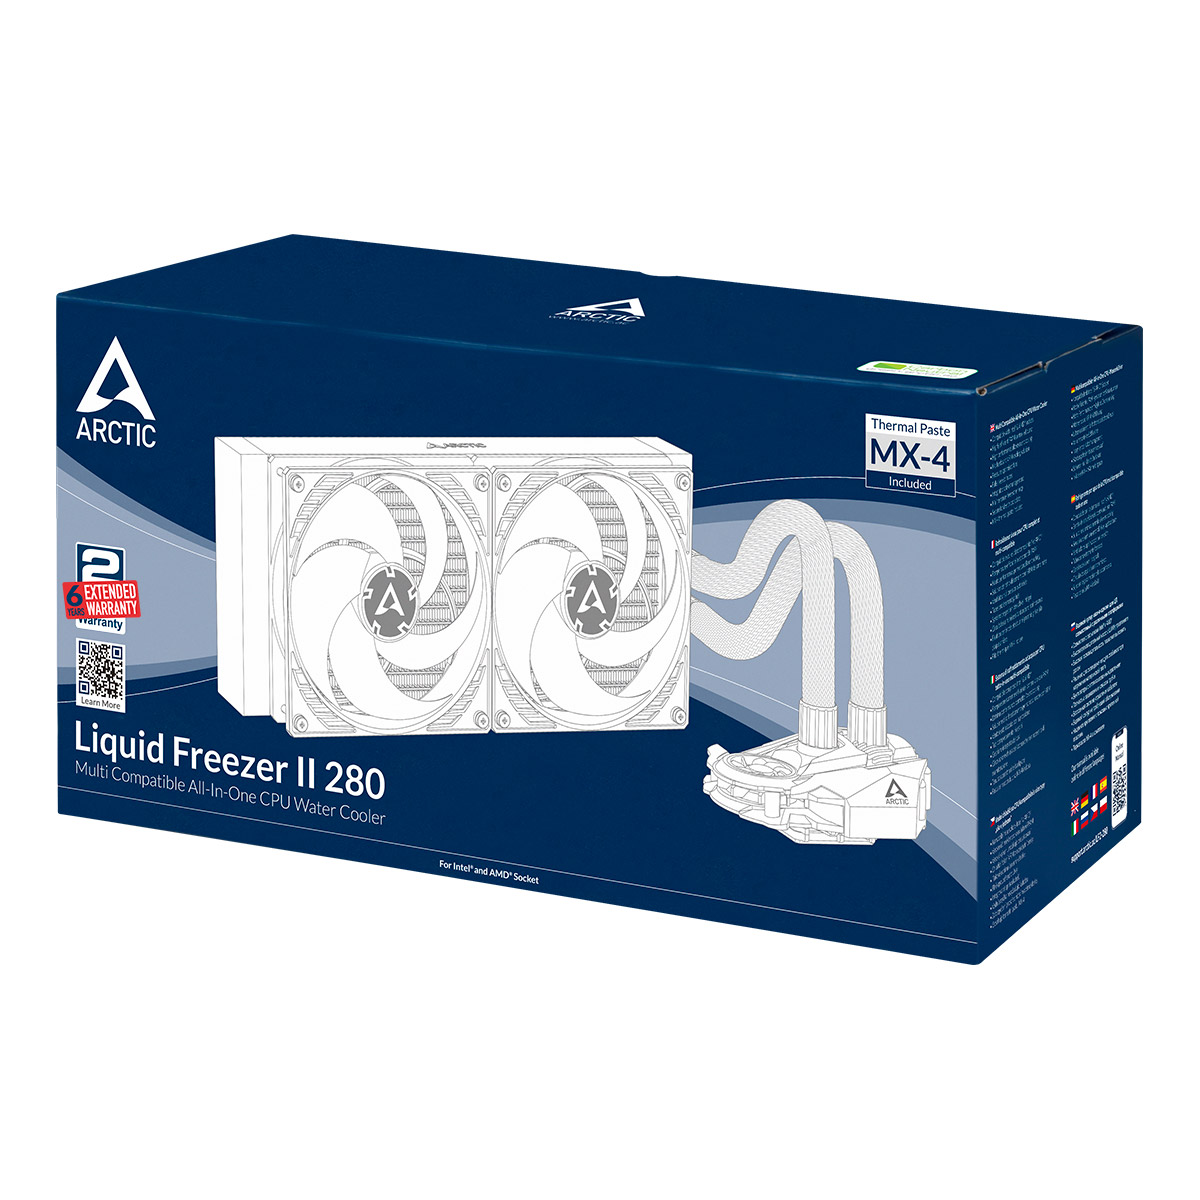 Multi-Compatible AiO CPU Water Cooler ARCTIC Liquid Freezer II 280 Packaging Front View